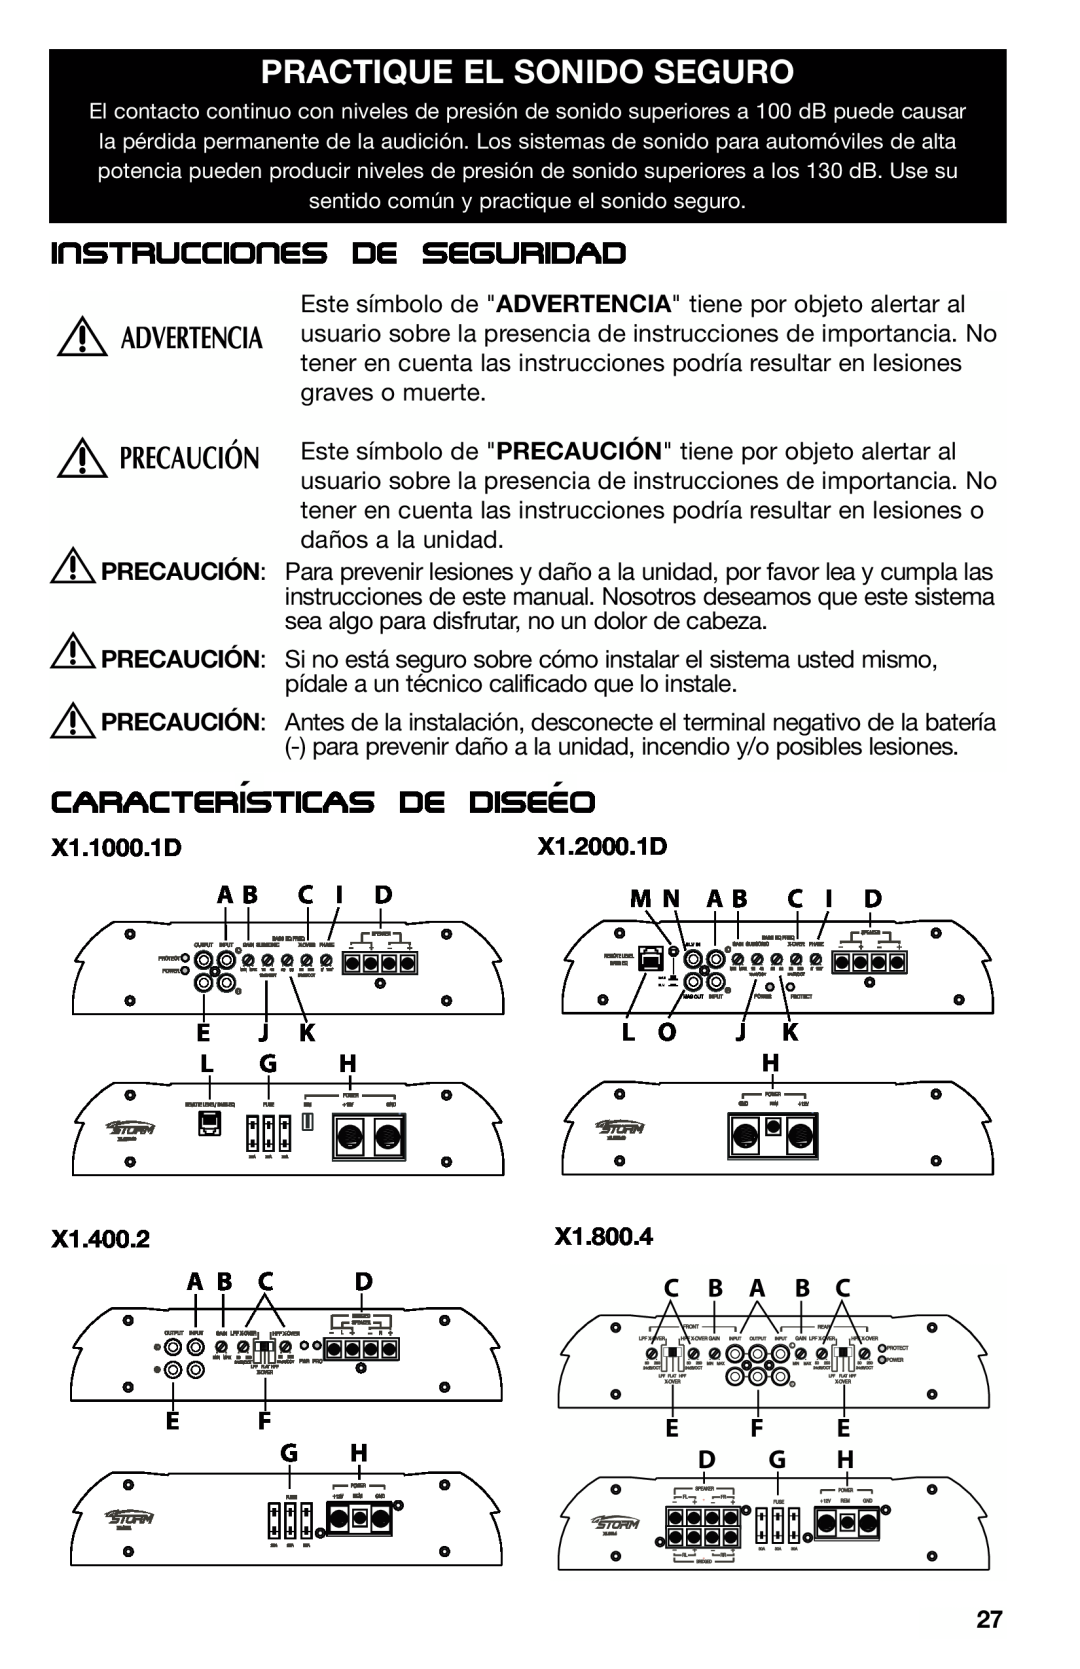 Lightning Audio X1.1000.1D Practique El Sonido Seguro, Instrucciones de seguridad, Caracteristicas´ de Diseeo´, A B C I D 